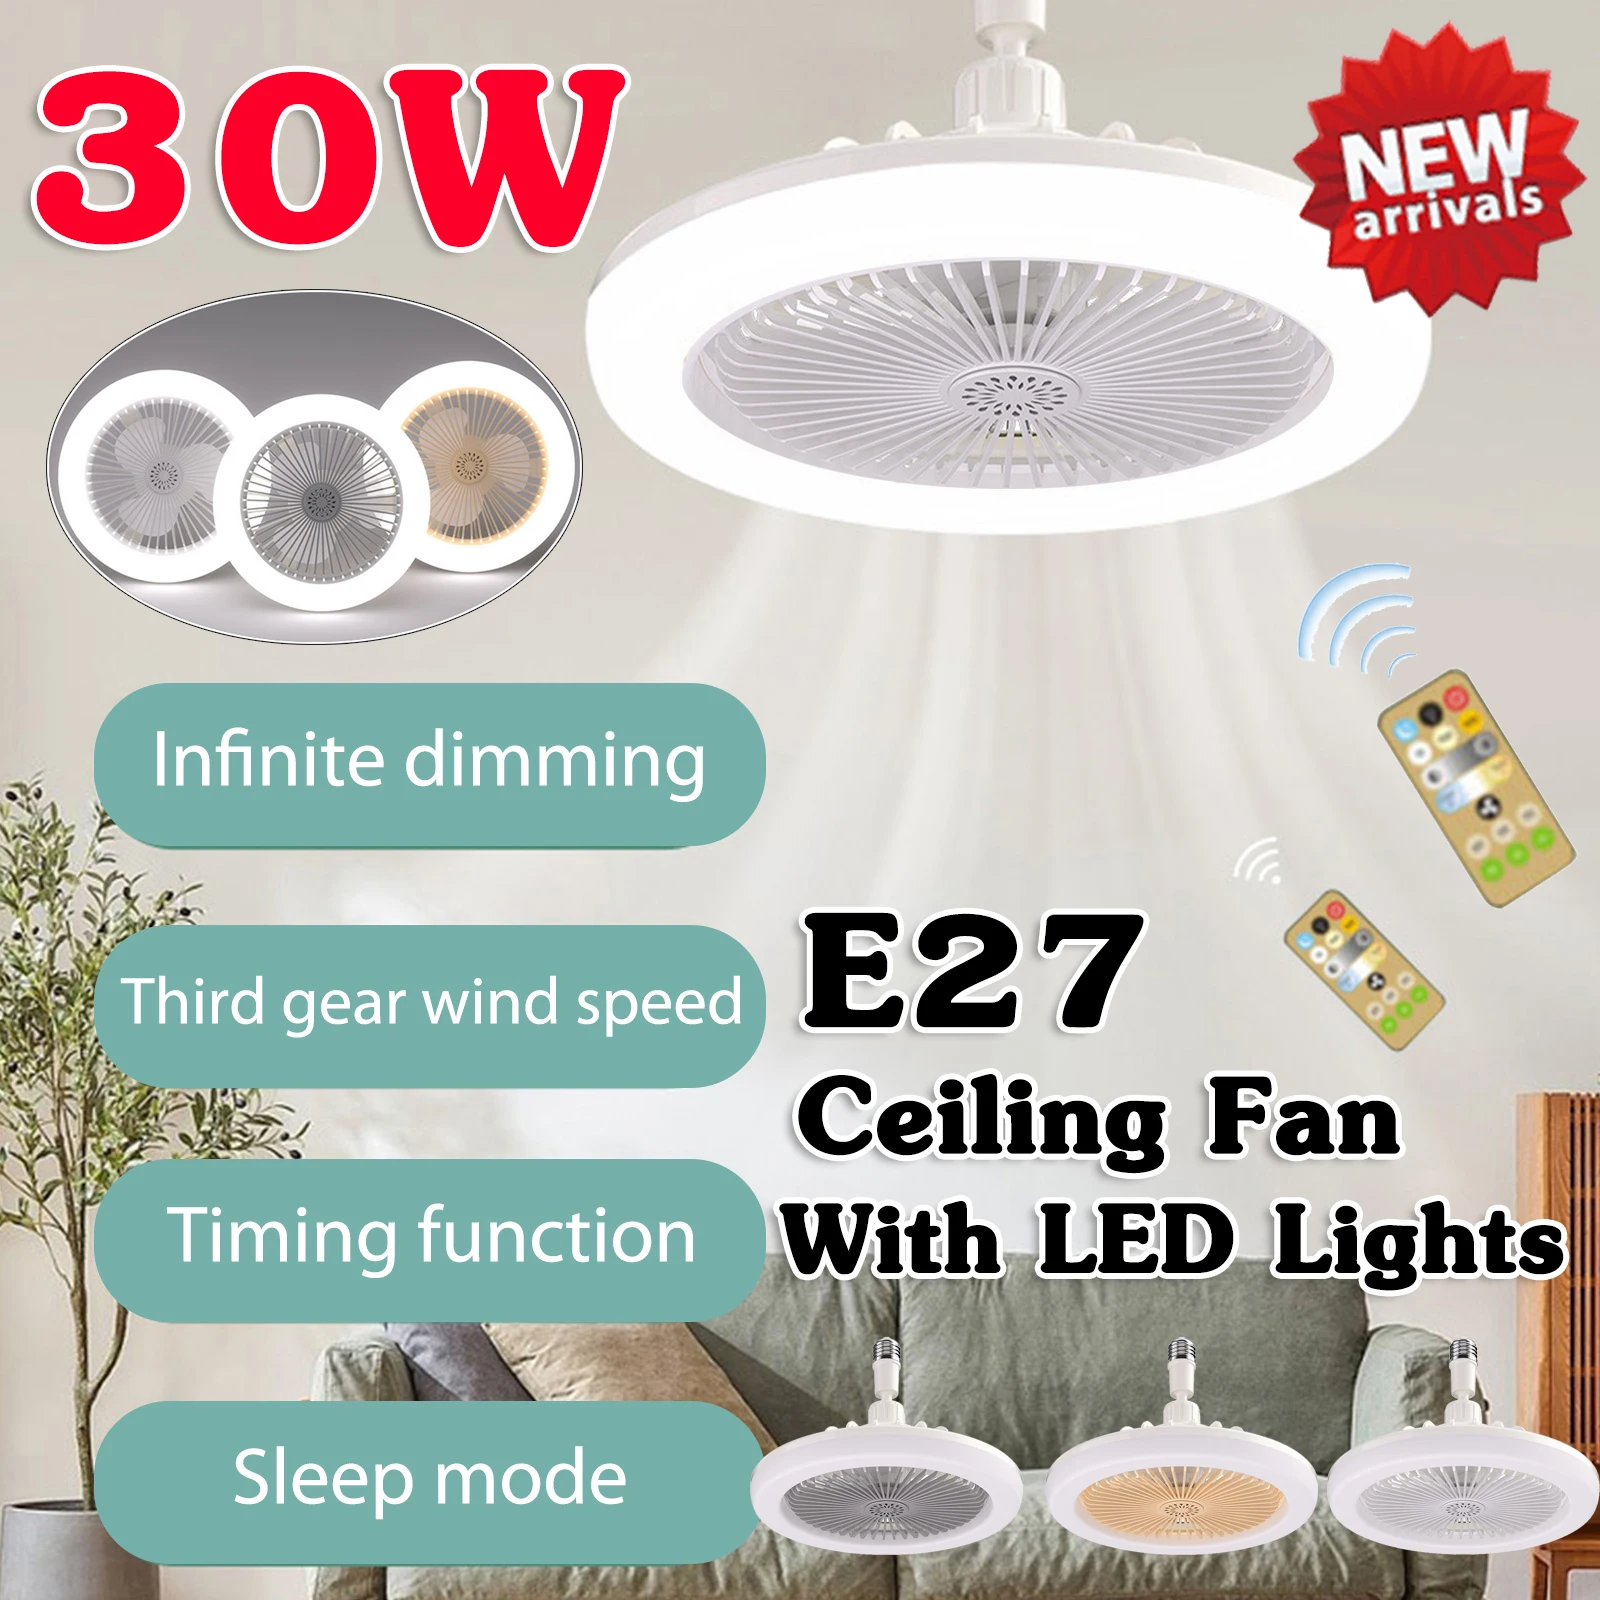 E27 מאוורר תקרה עם אורות LED מאוורר אור מנורת התקרה עם מאוורר מאוורר חשמלי עם שלט רחוק עבור חדר השינה לסלון עיצוב - 0